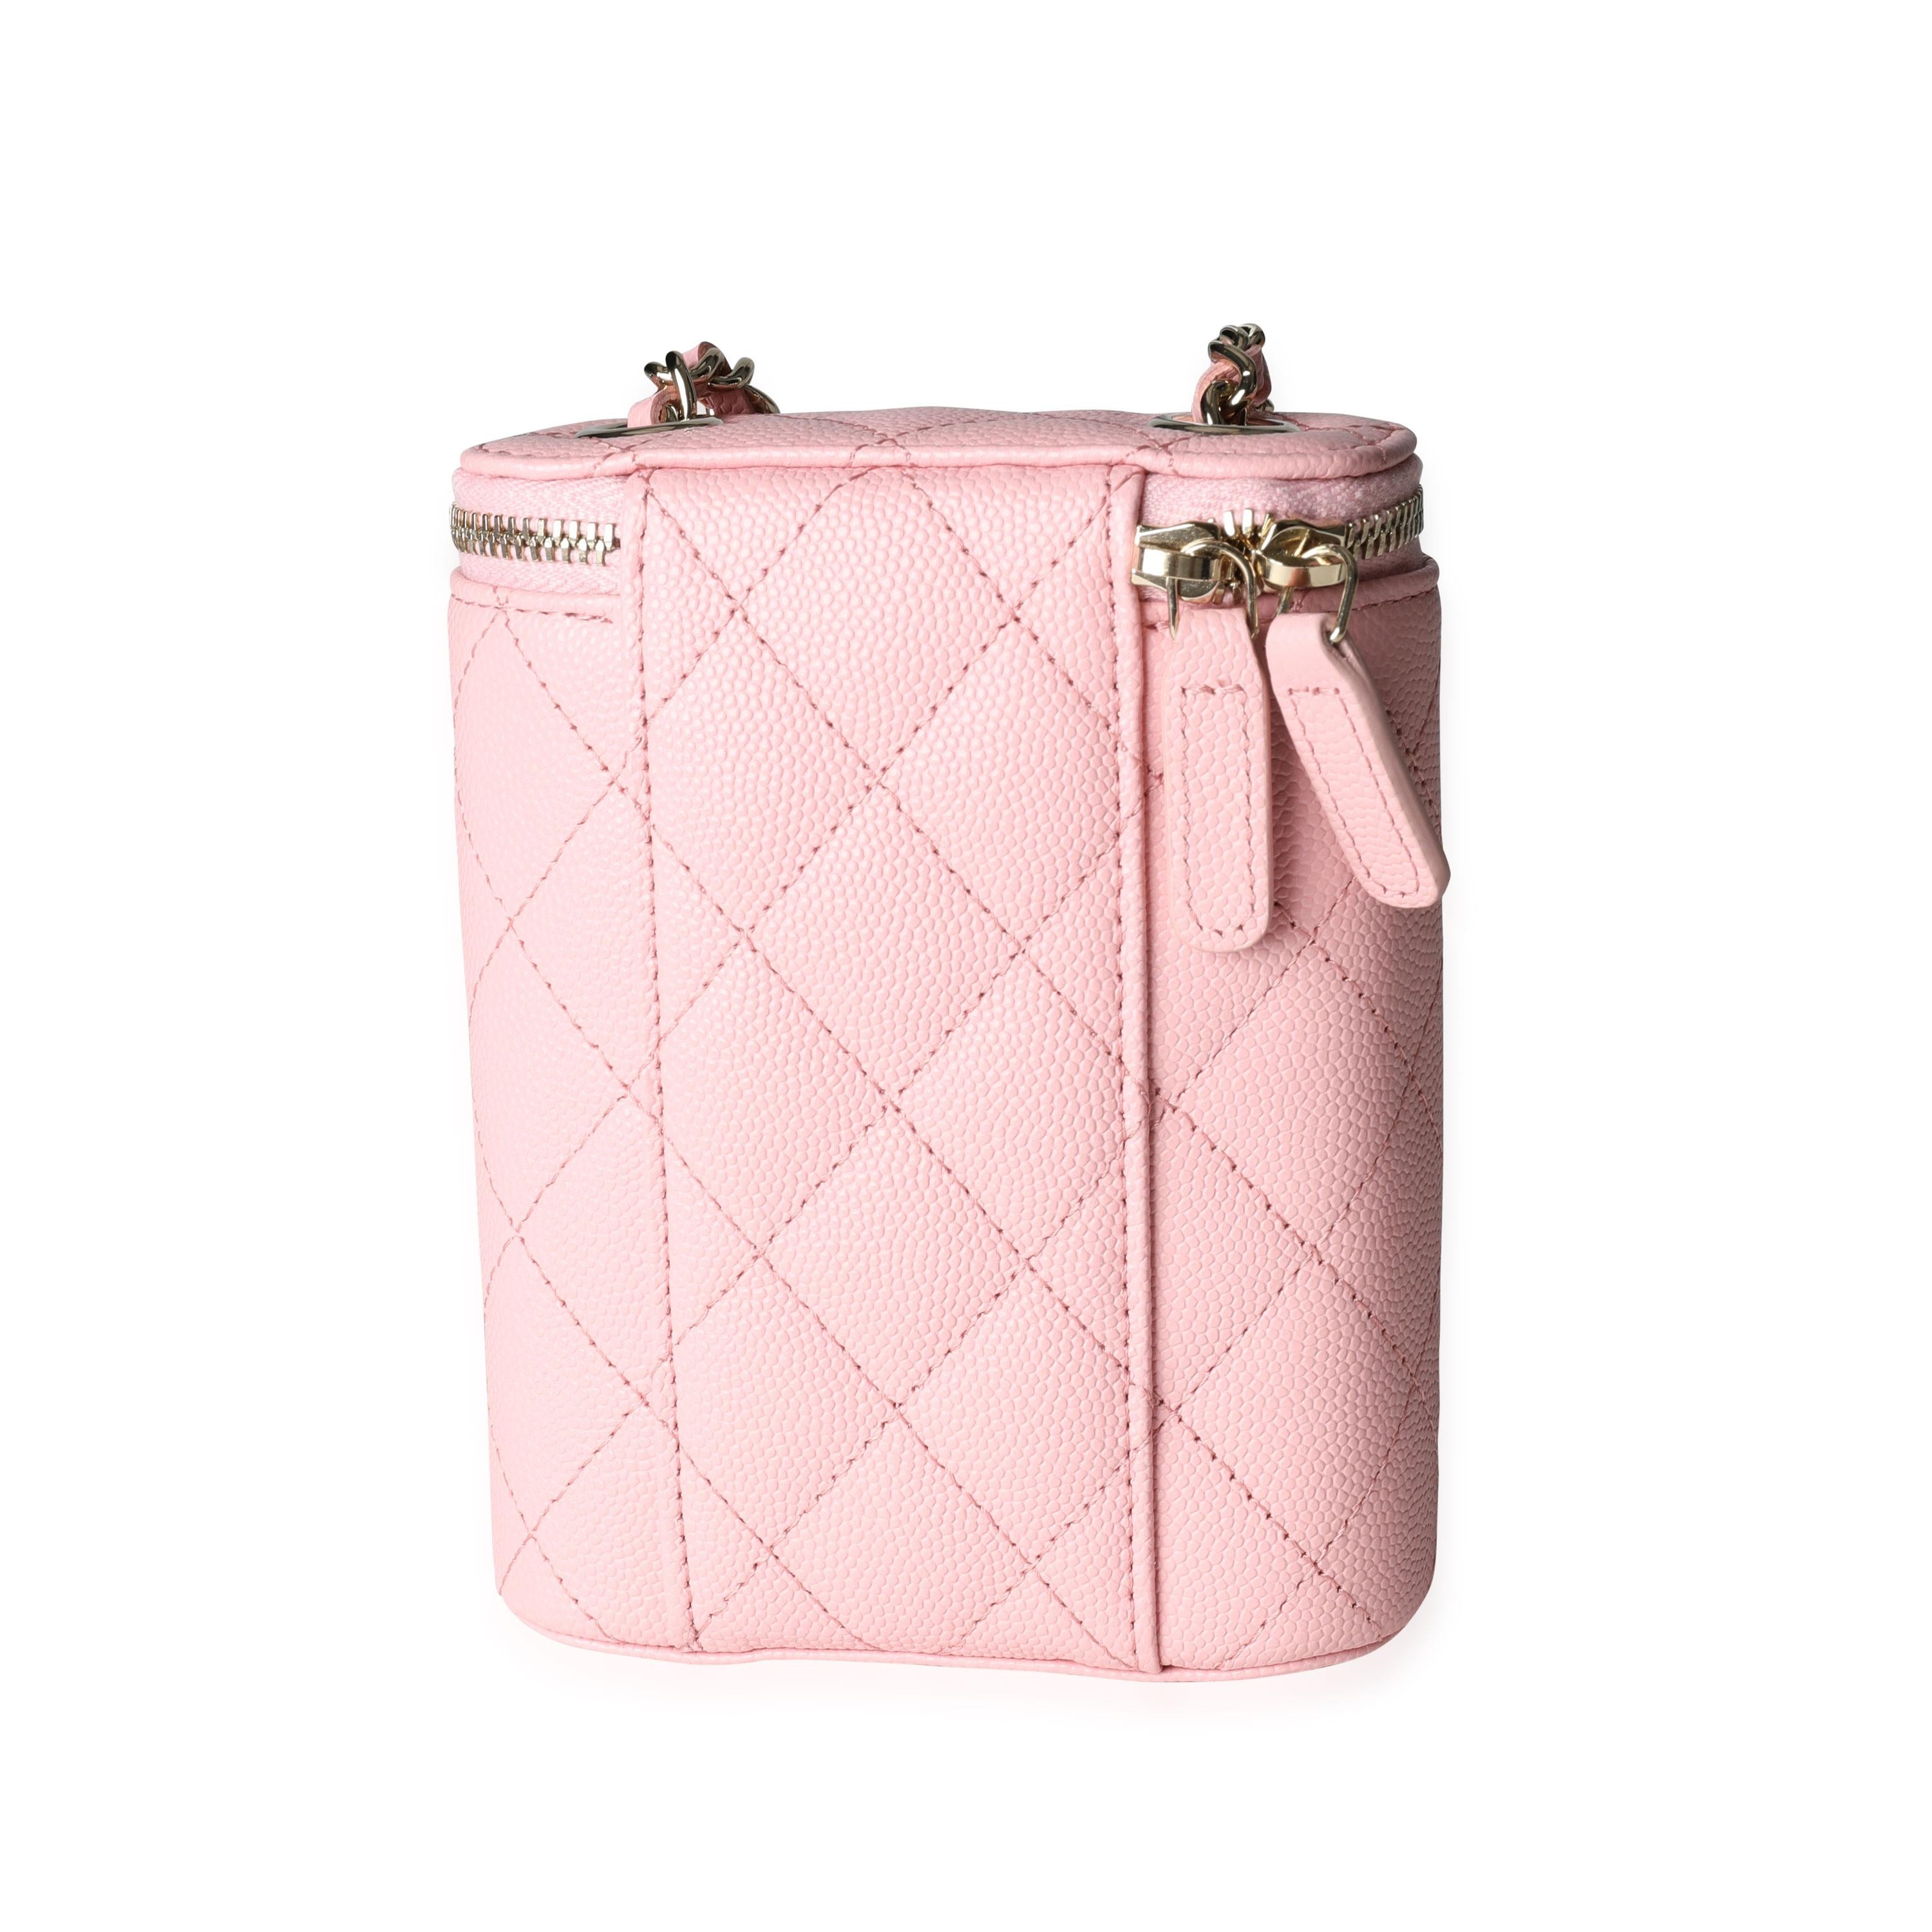 chanel pink vanity bag